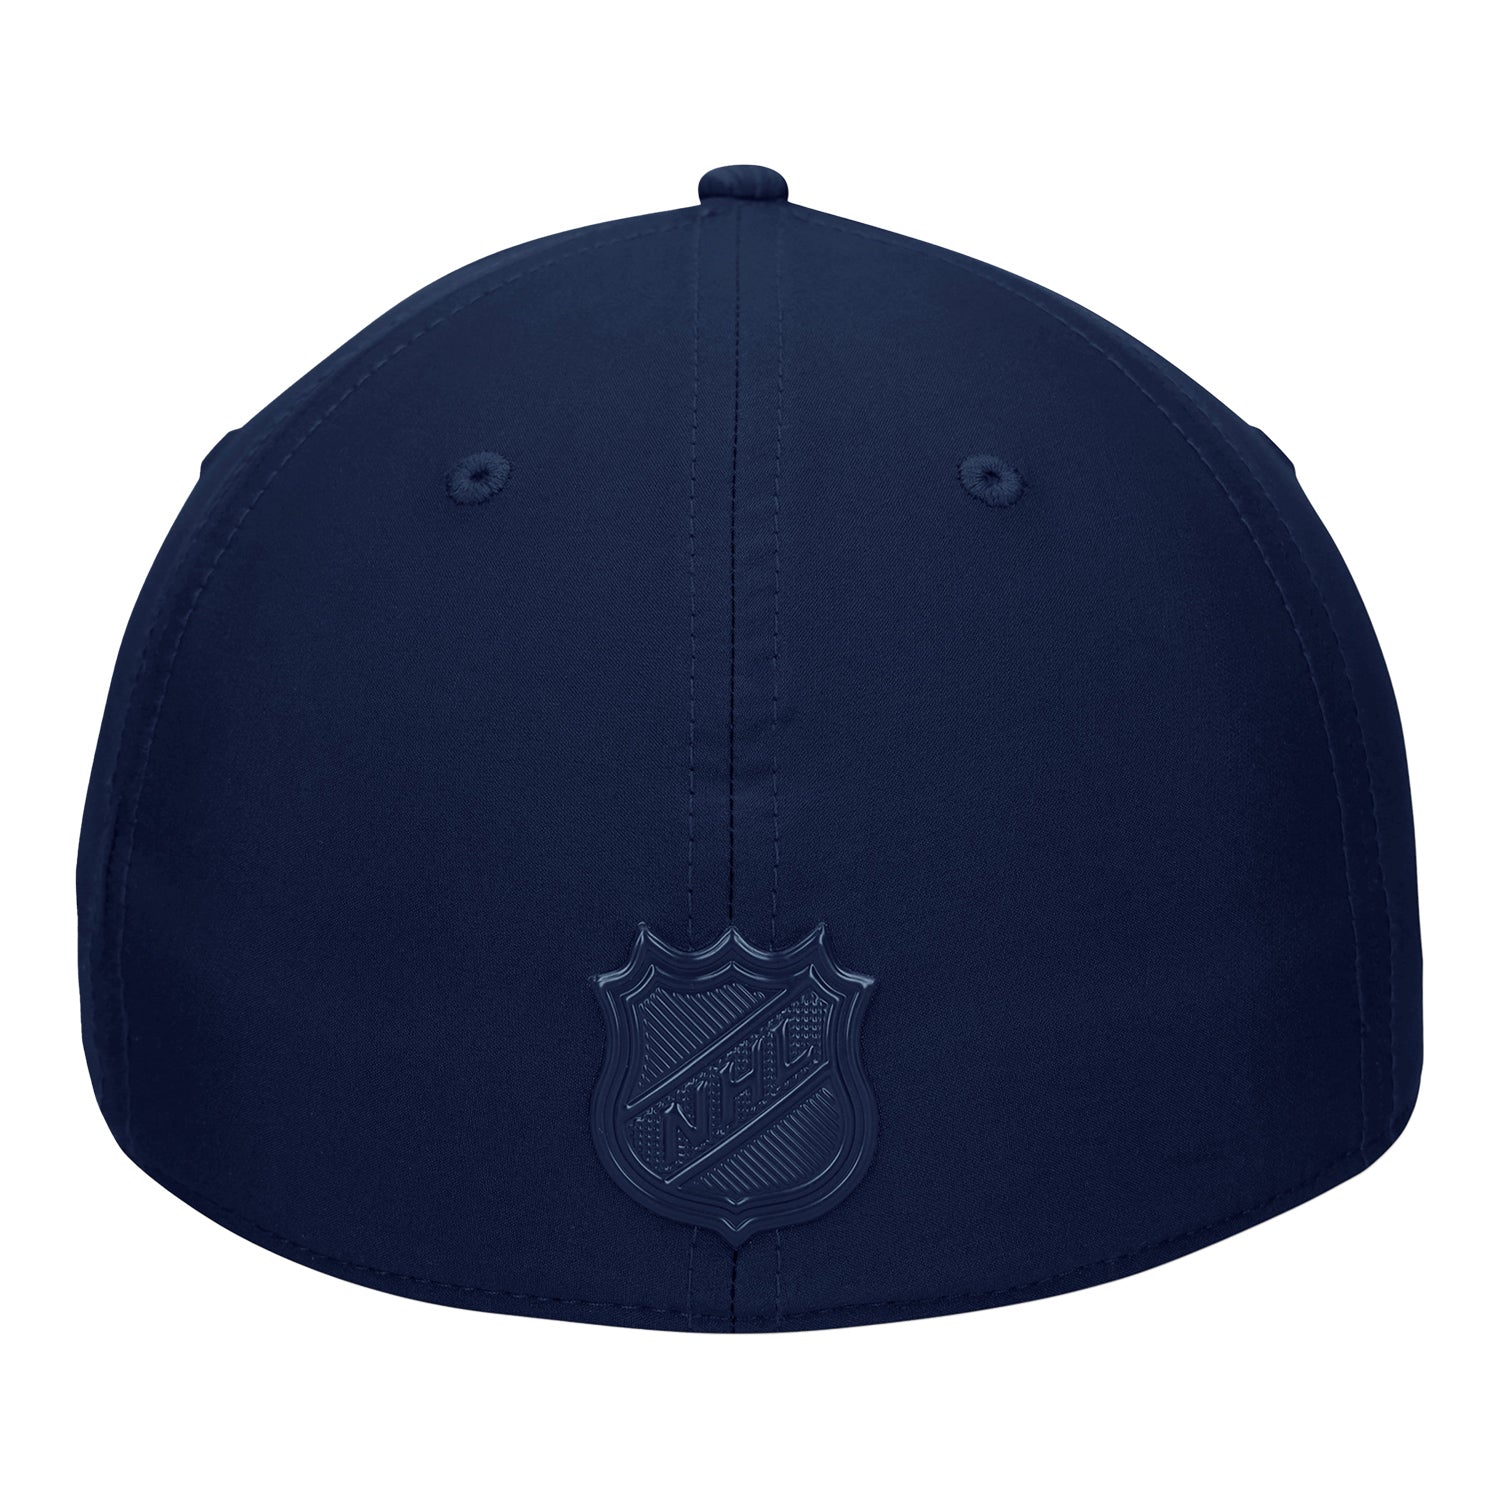 Fanatics St. Louis Blues 2023 Draft Adjustable Hat Navy One Size